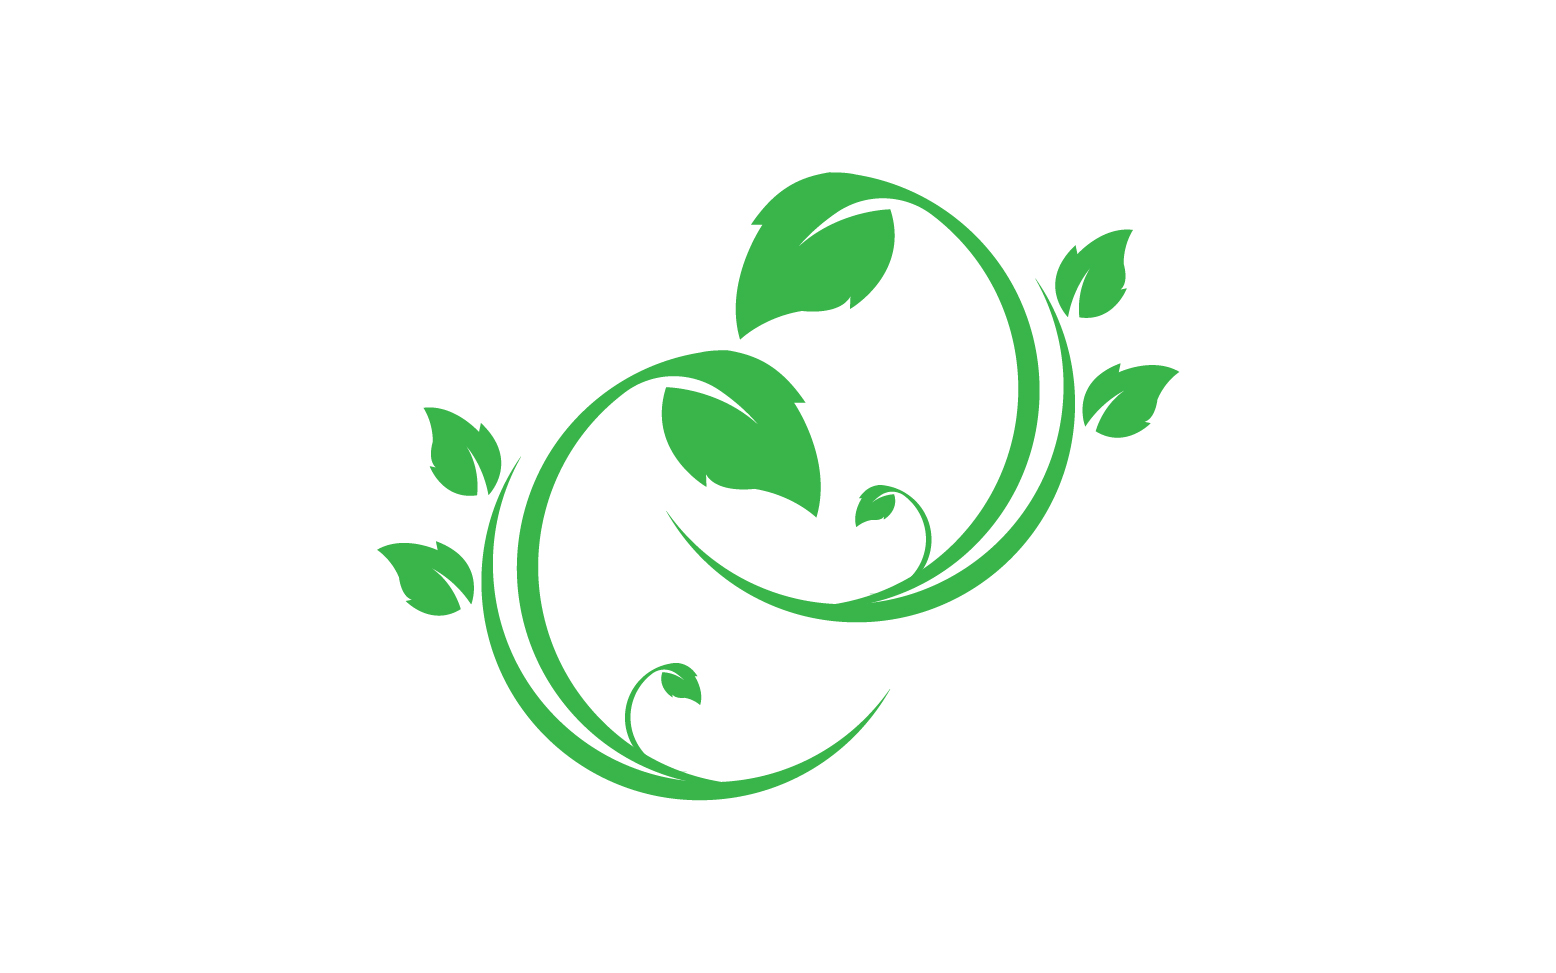 Leaf green ecology tree element icon version v25